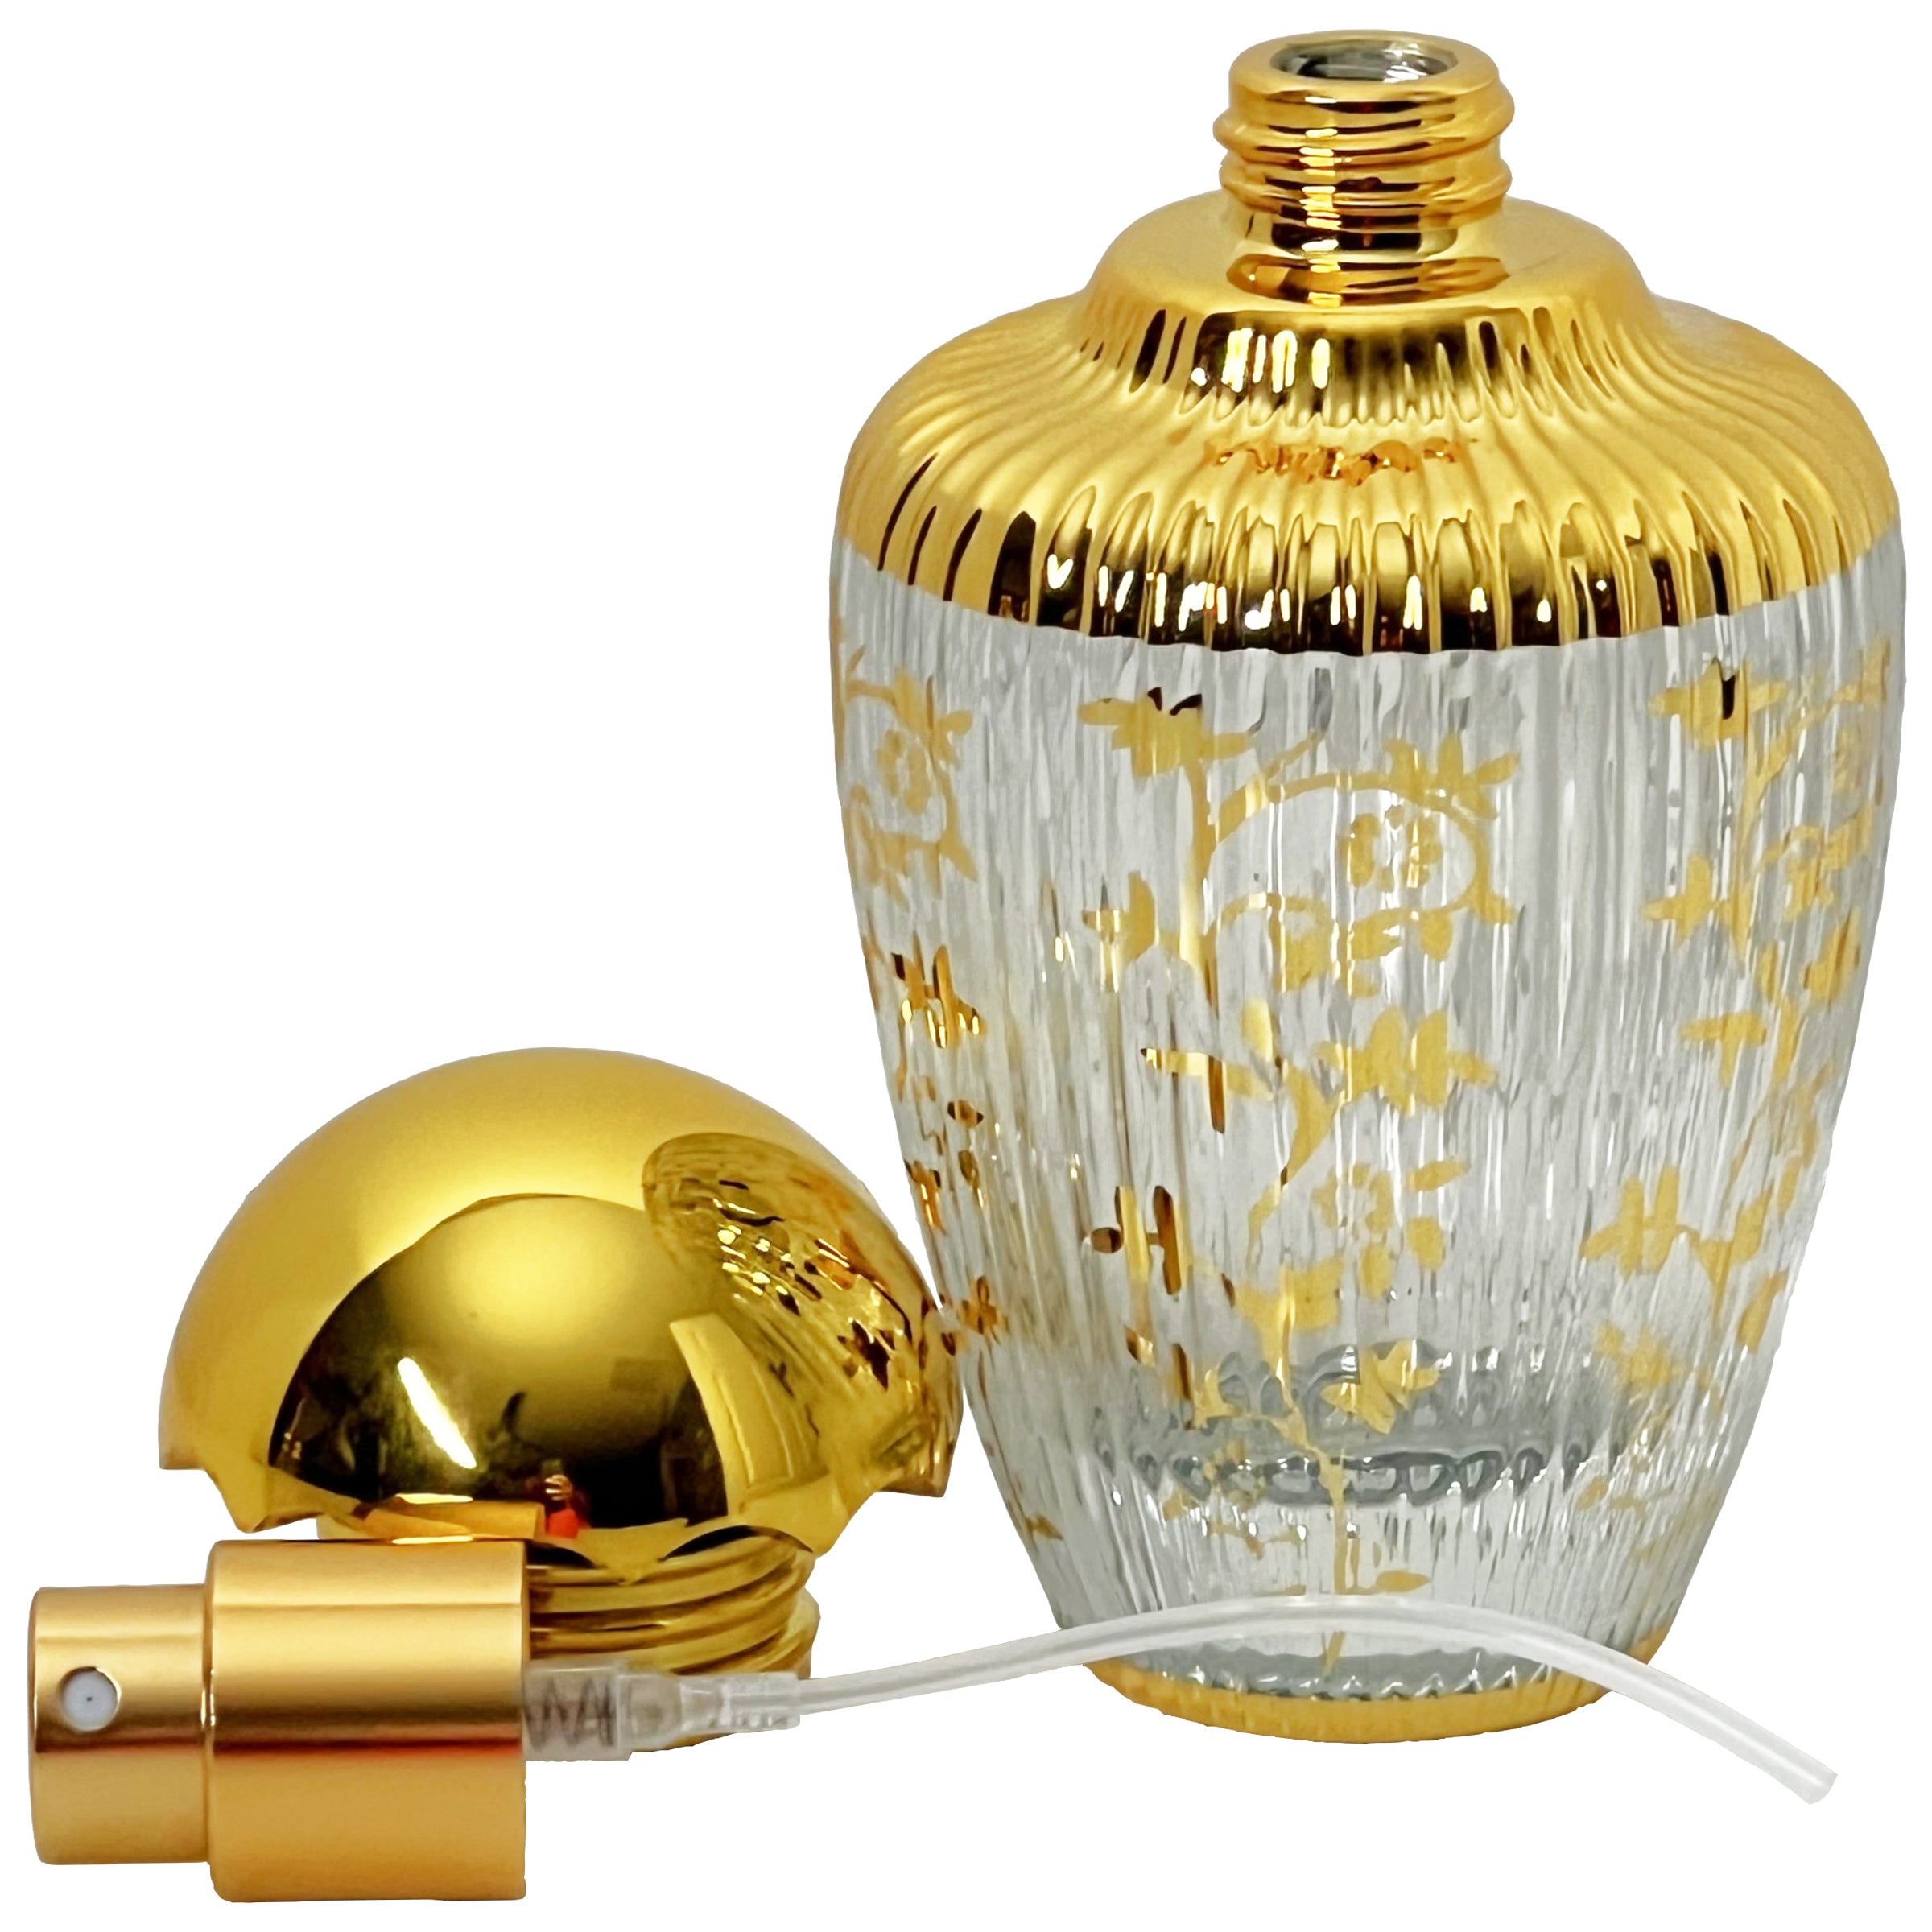 50ml 1.7oz oriental vase spray bottle uv gold umbrella lid